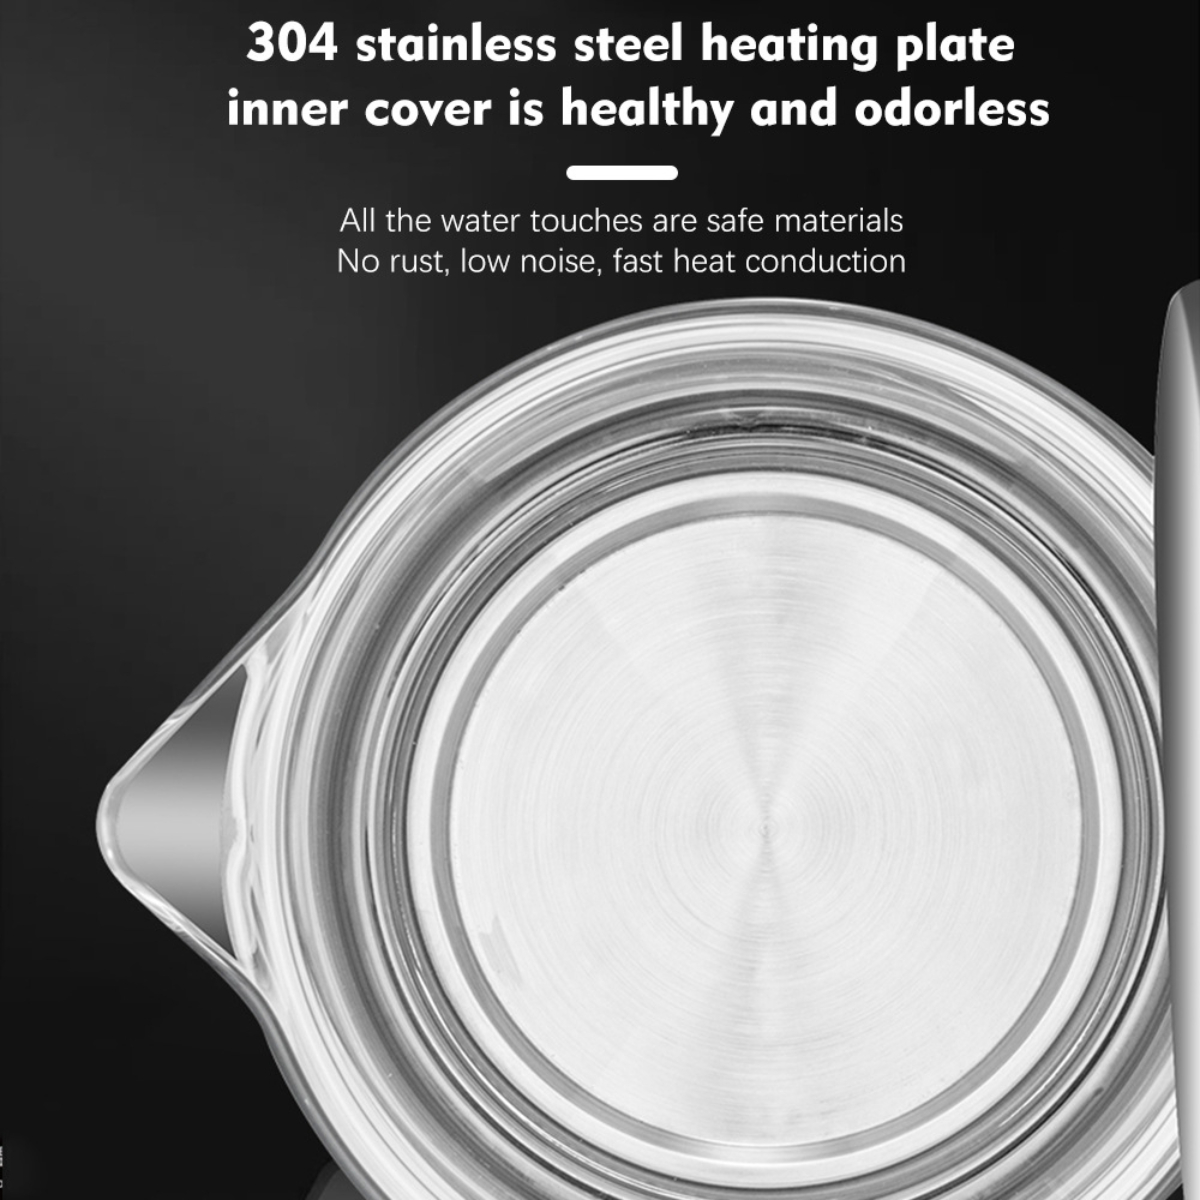 schneller Wasserkocher Kessel BYTELIKE Elektrischer Weiß Glasfenster Wasserkocher, Anti-Trocken-Kochen